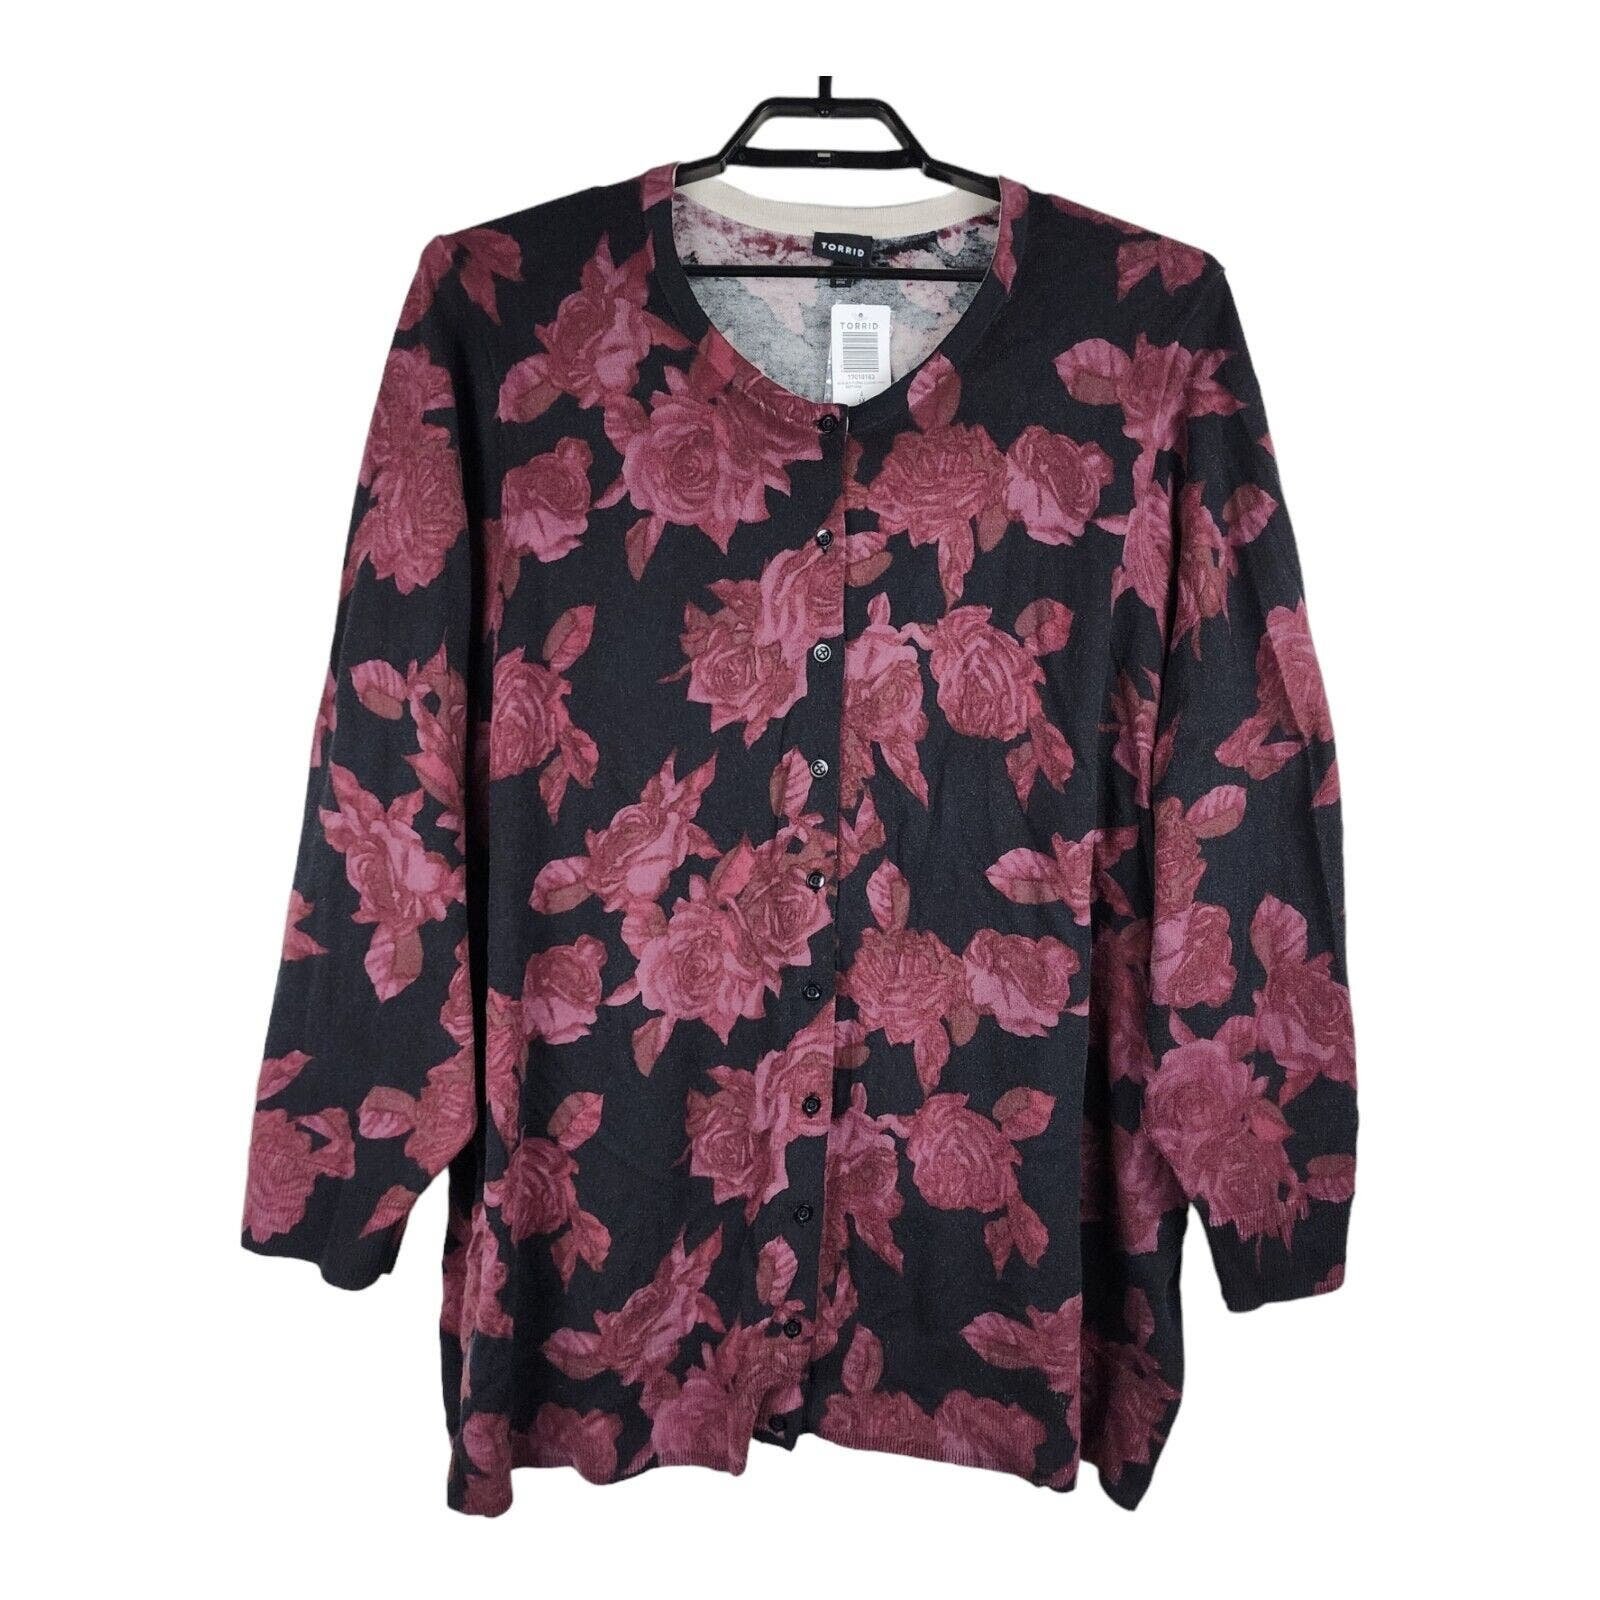 Buy Torrid Floral Cardigan Womens Size 6X 30 Purple Black Sweater Rose Flowers NEW g82uVdajF Online Exclusive